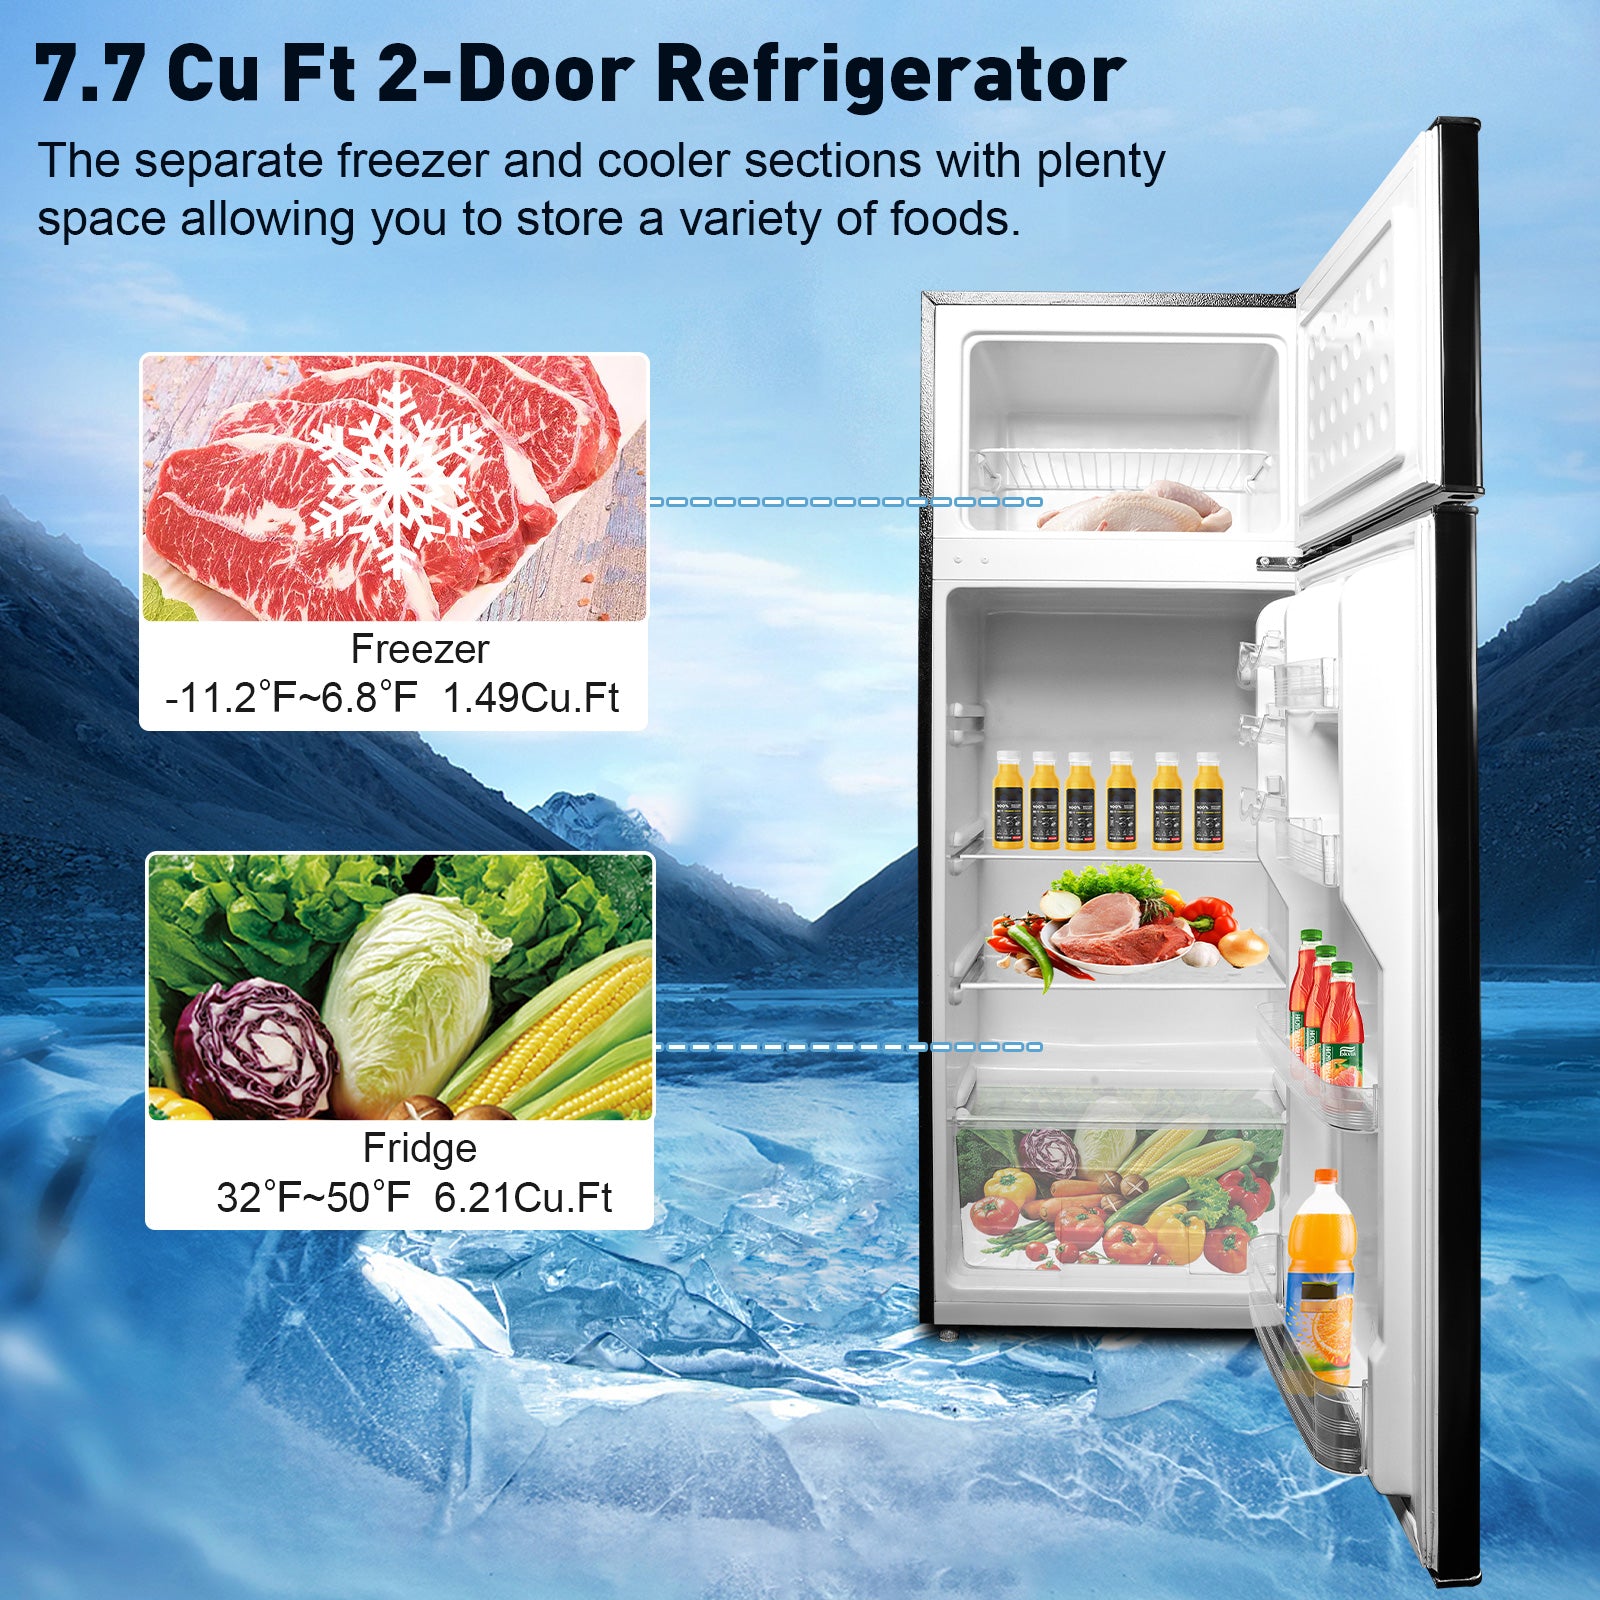 7.7 Cu.Ft. 2-Door Refrigerator with Freezer Fridge with Adjustable Thermostat Control, Black